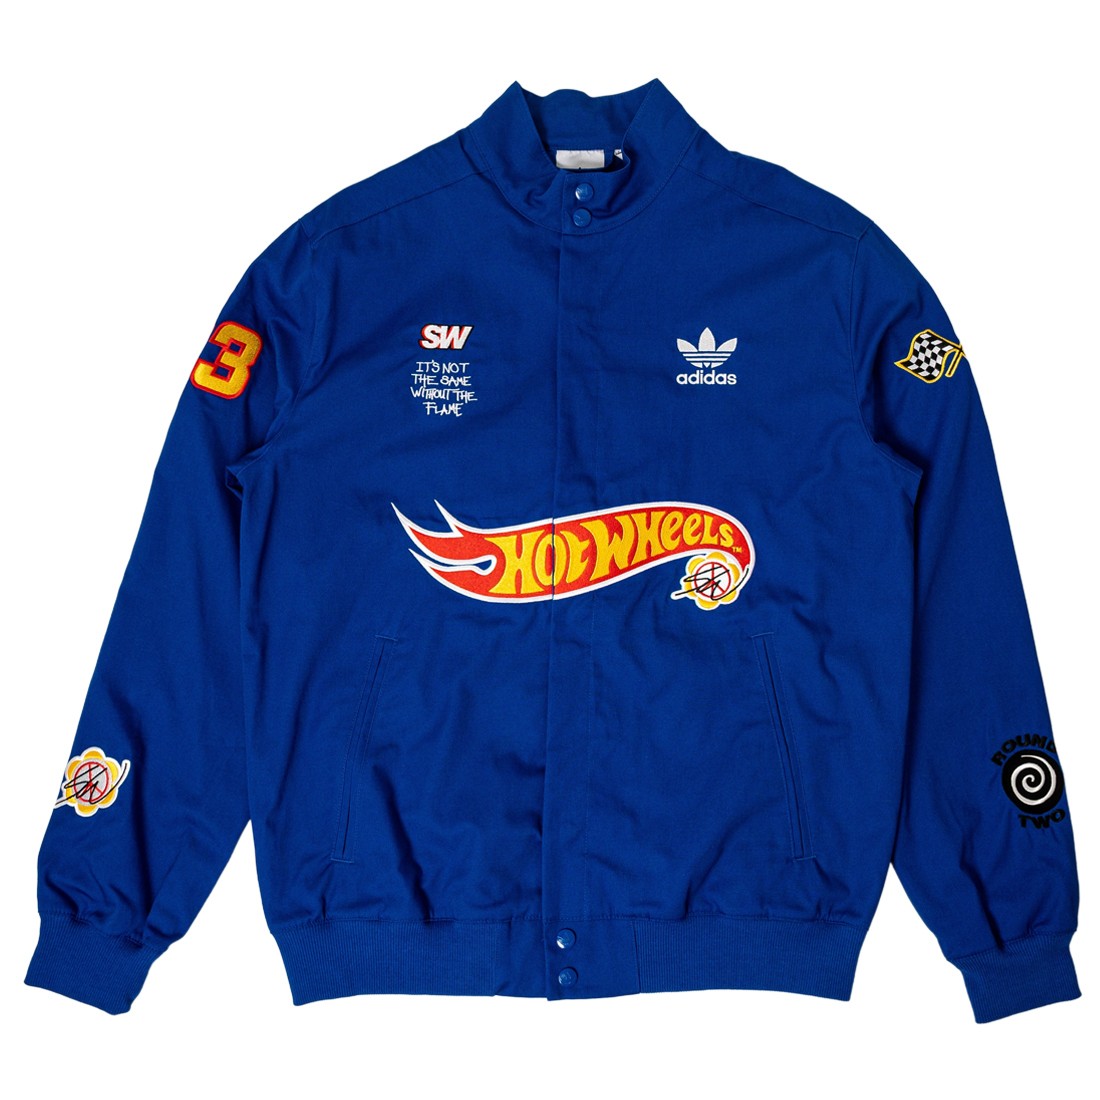 Adidas x Sean Wotherspoon x Hot Wheels Men Race Jacket (blue / power blue)